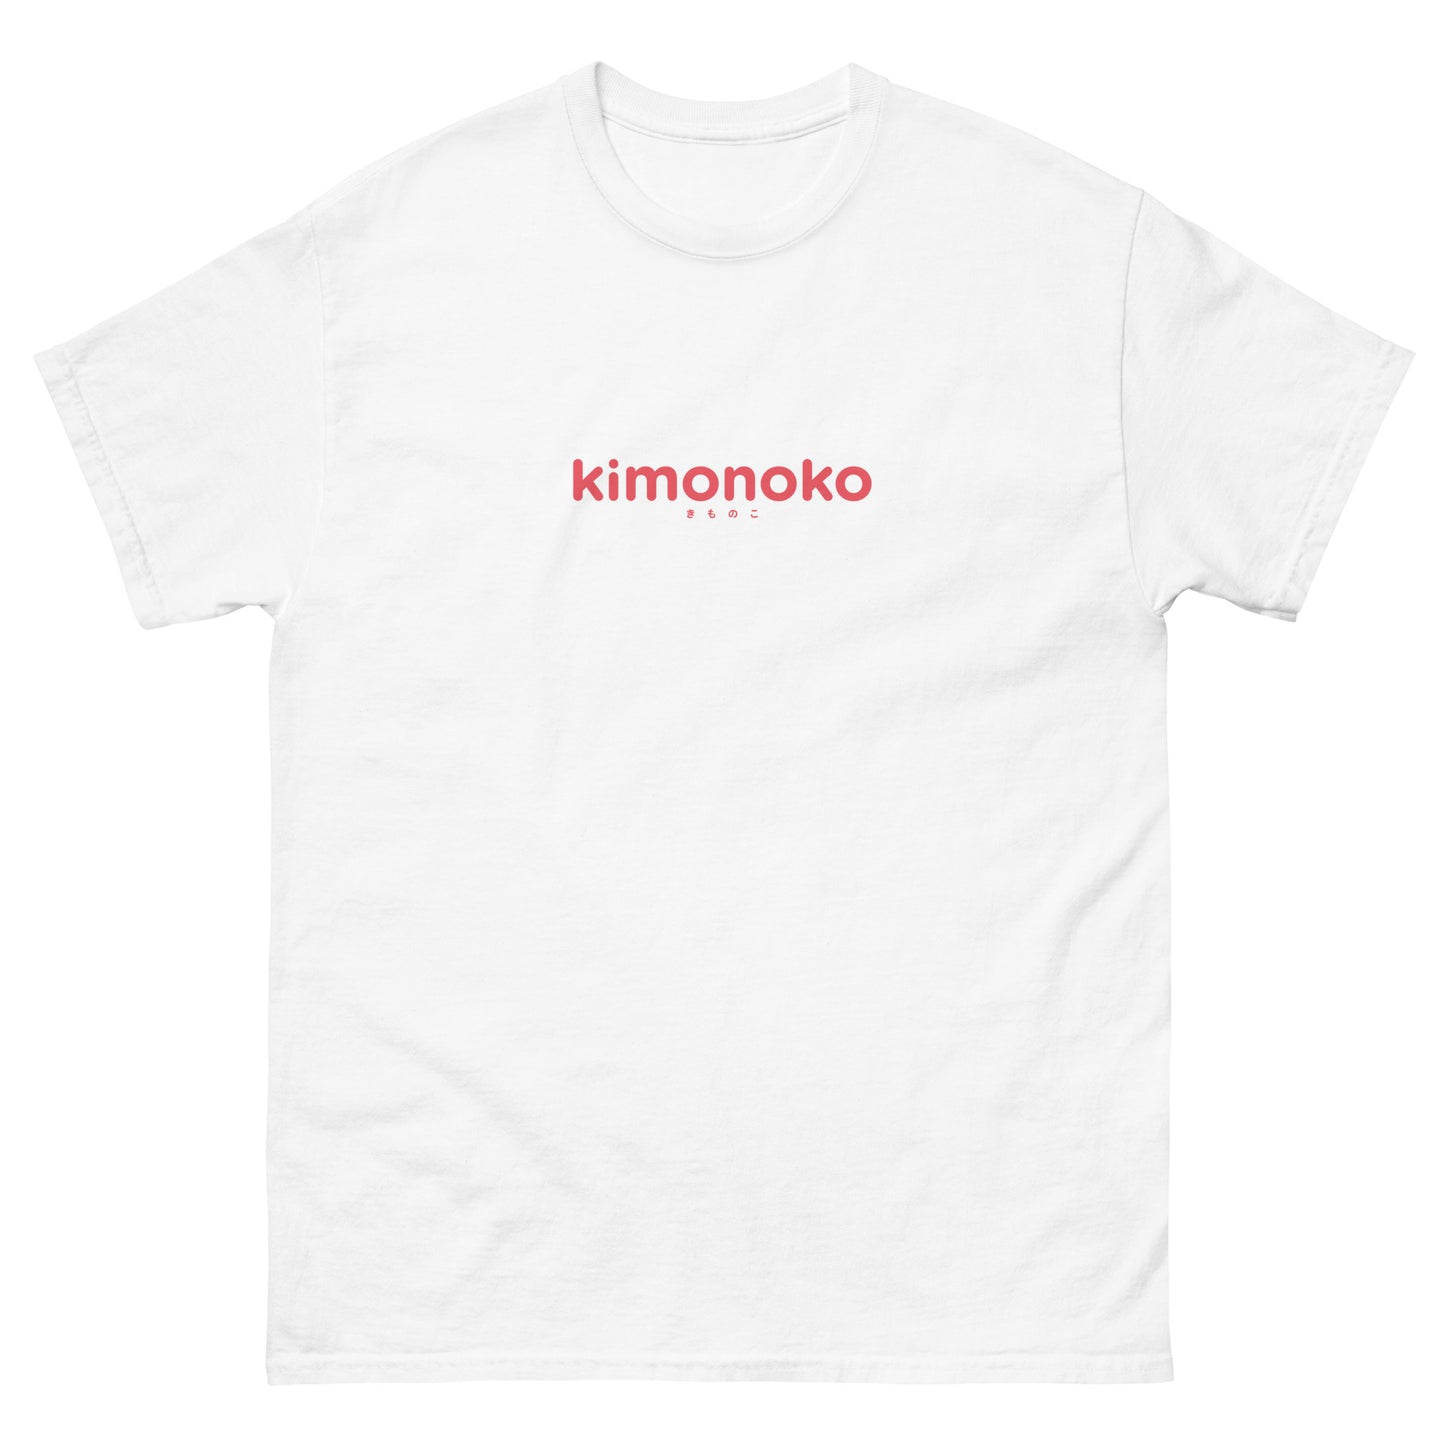 T-shirt for kimonoko